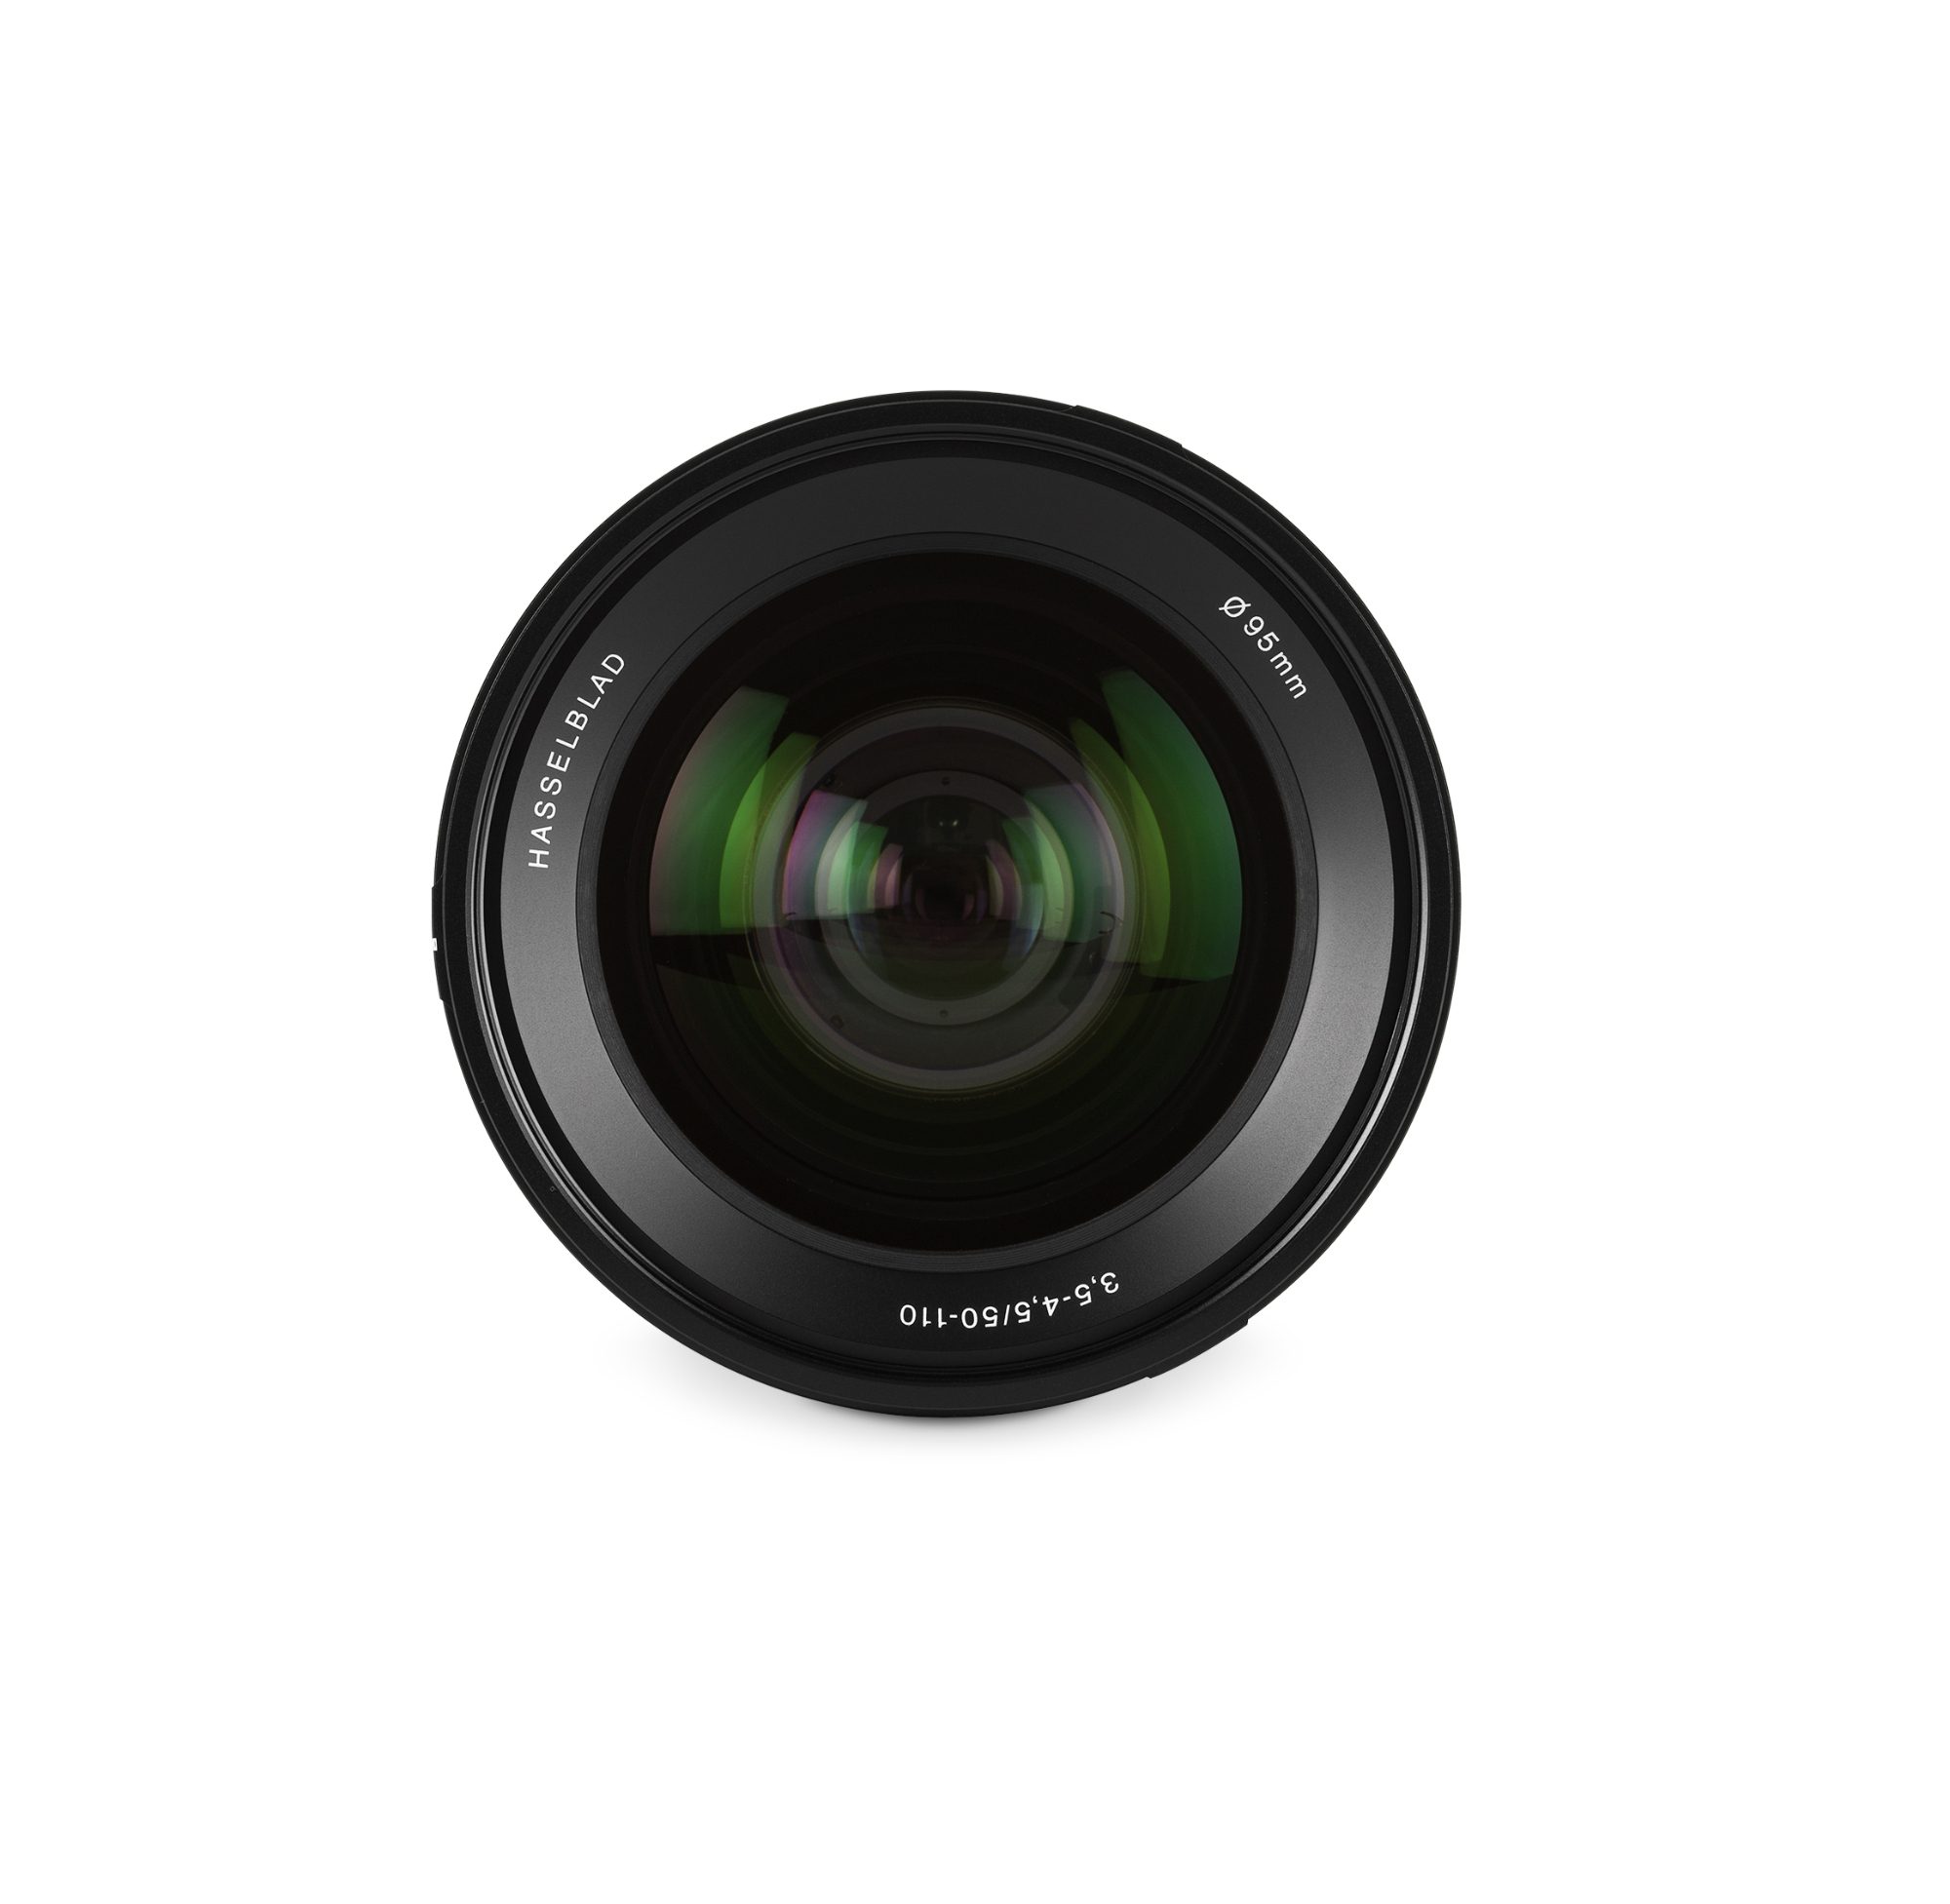 Hasselblad Lens HC F3.5-4.5/50-110mm